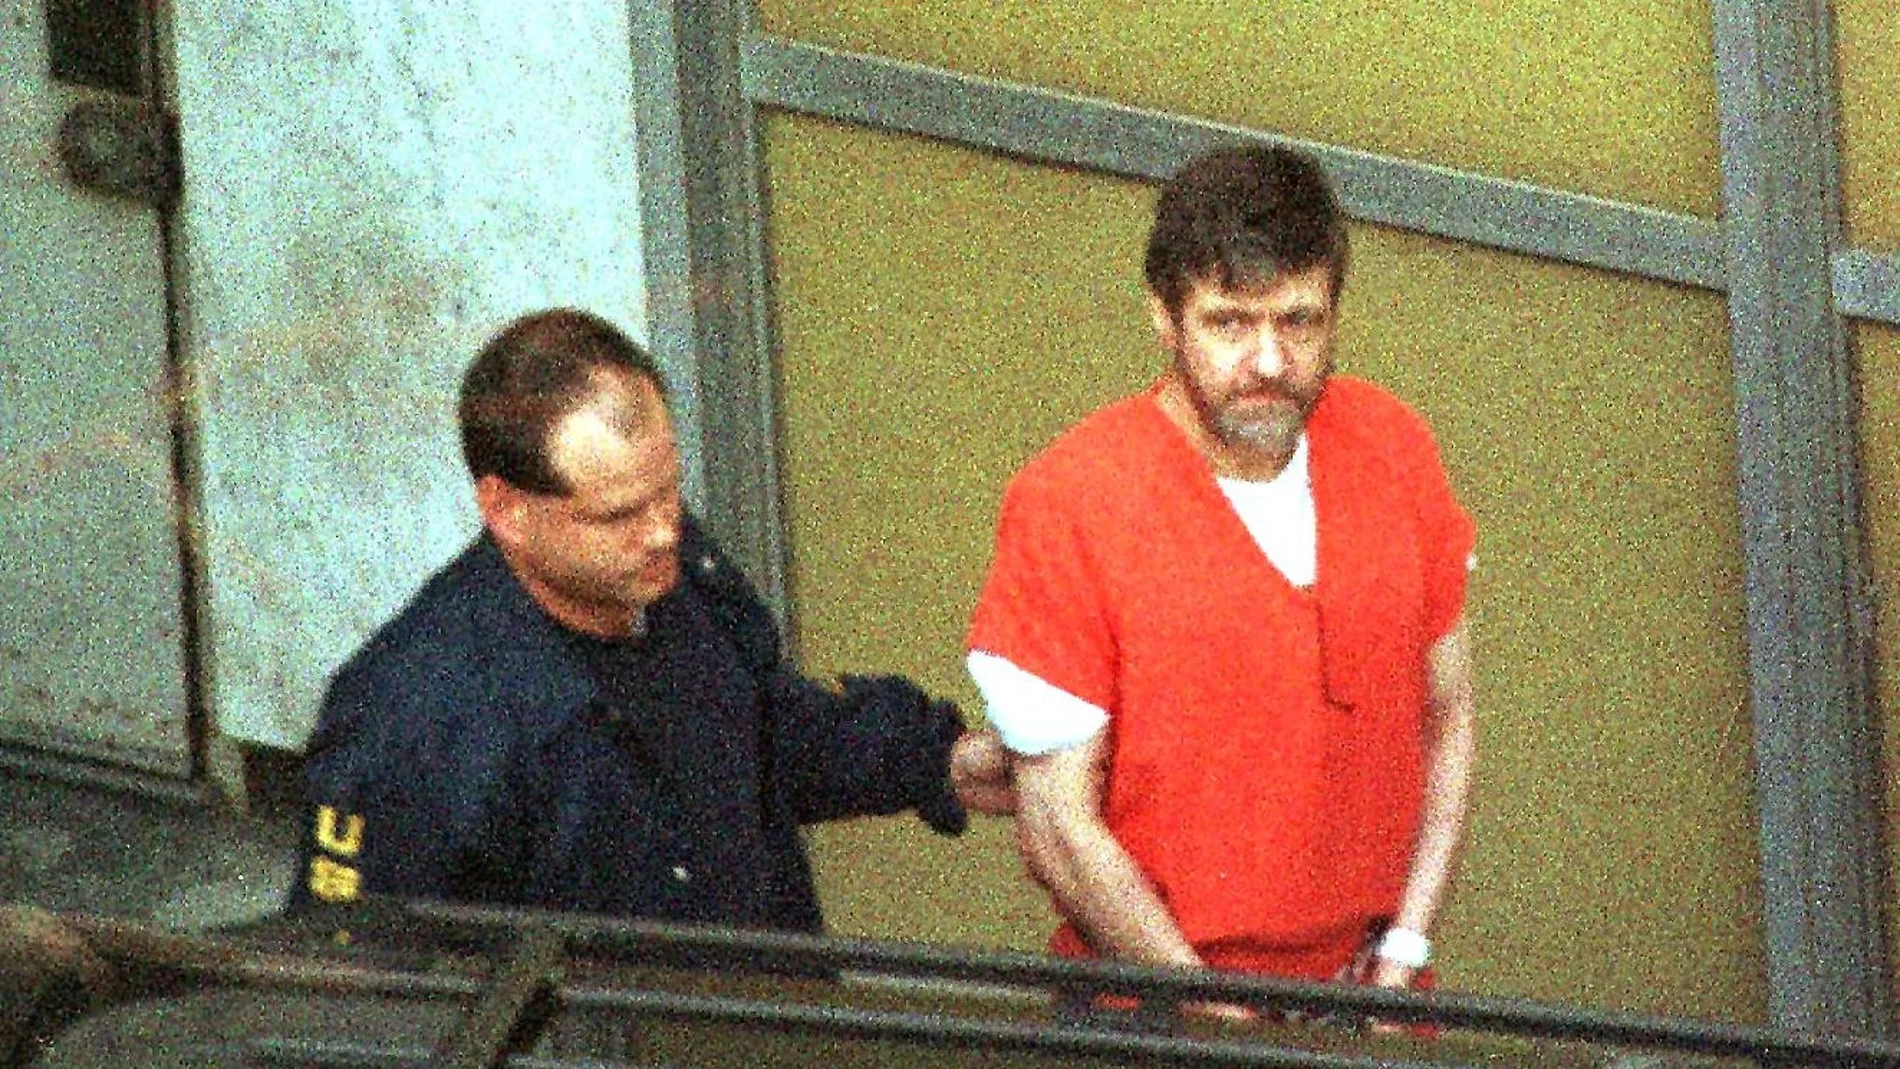 Ted Kaczynski "Unabomber", esposado